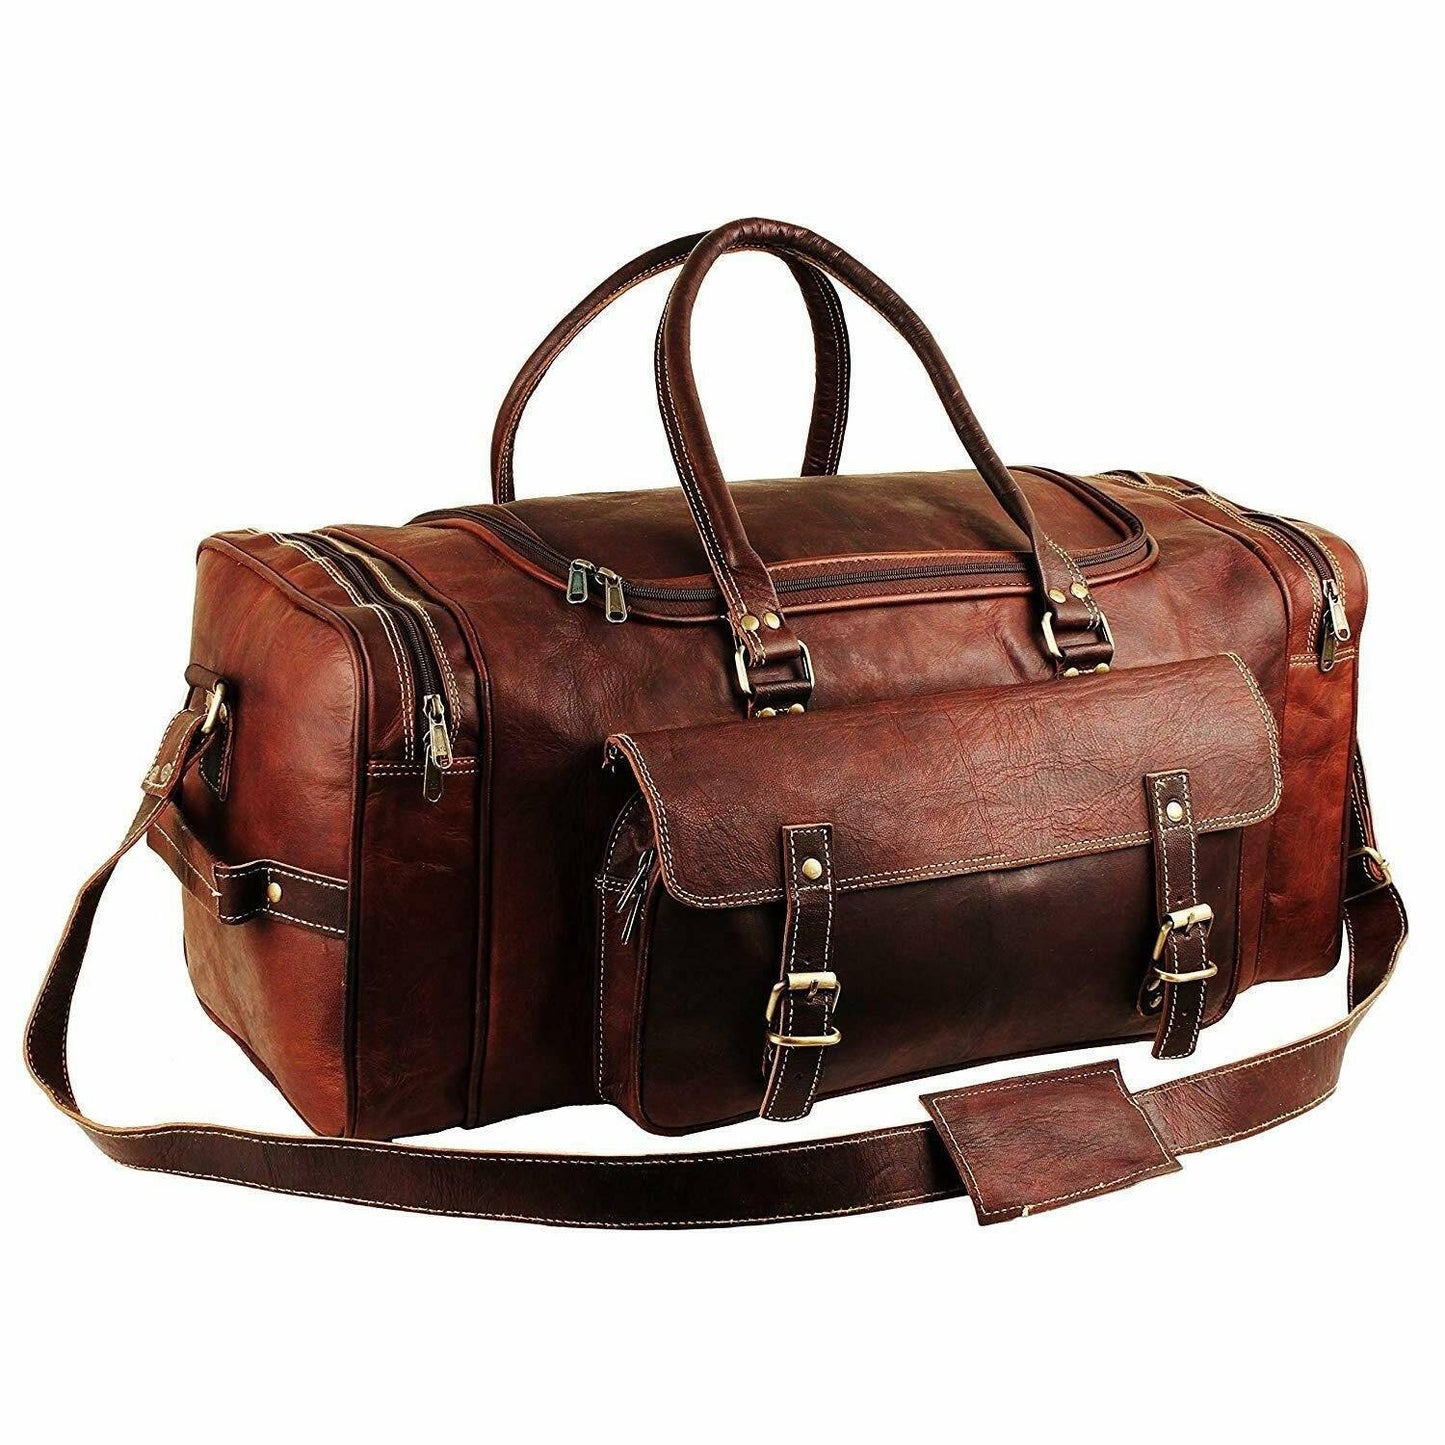 Twenty Four Checkered Bag Travel Duffel Bag Weekend Overnight Luggage Shoulder Bag for Men Women -Black, Adult Unisex, Size: One Size